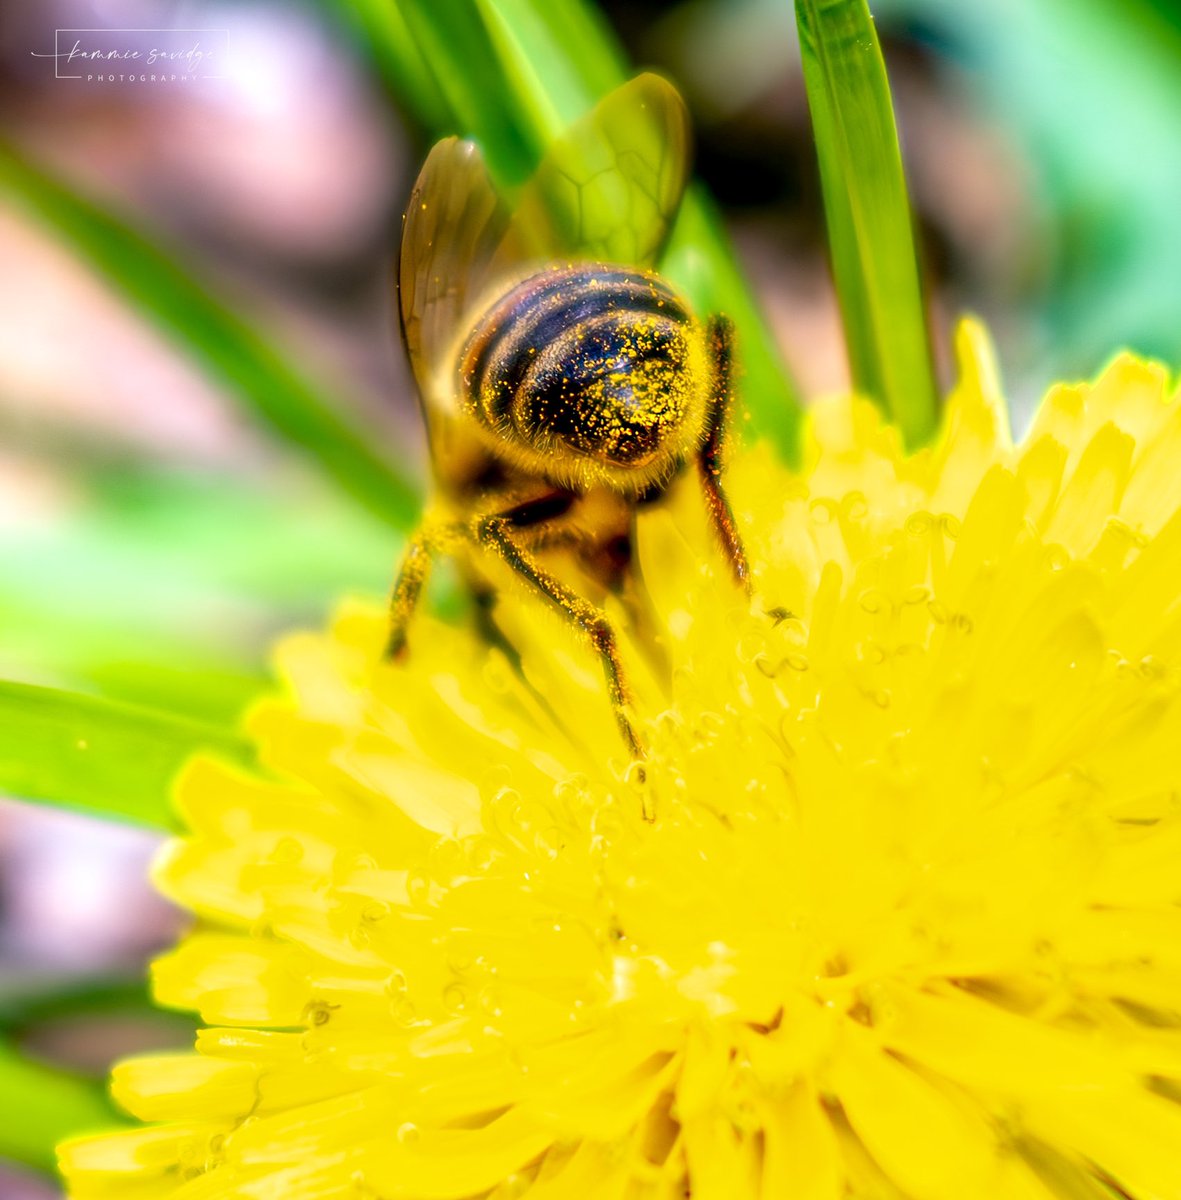 Pollen Butt! #bees #workerbees #honeybees #savethebees #nature #naturephotography #outdoors #springtime #seasons #dandelions #pollinators #flowers #pollen #myhappyplace #smile #yellow #beesinthebackyard #kammiesavidgephotography